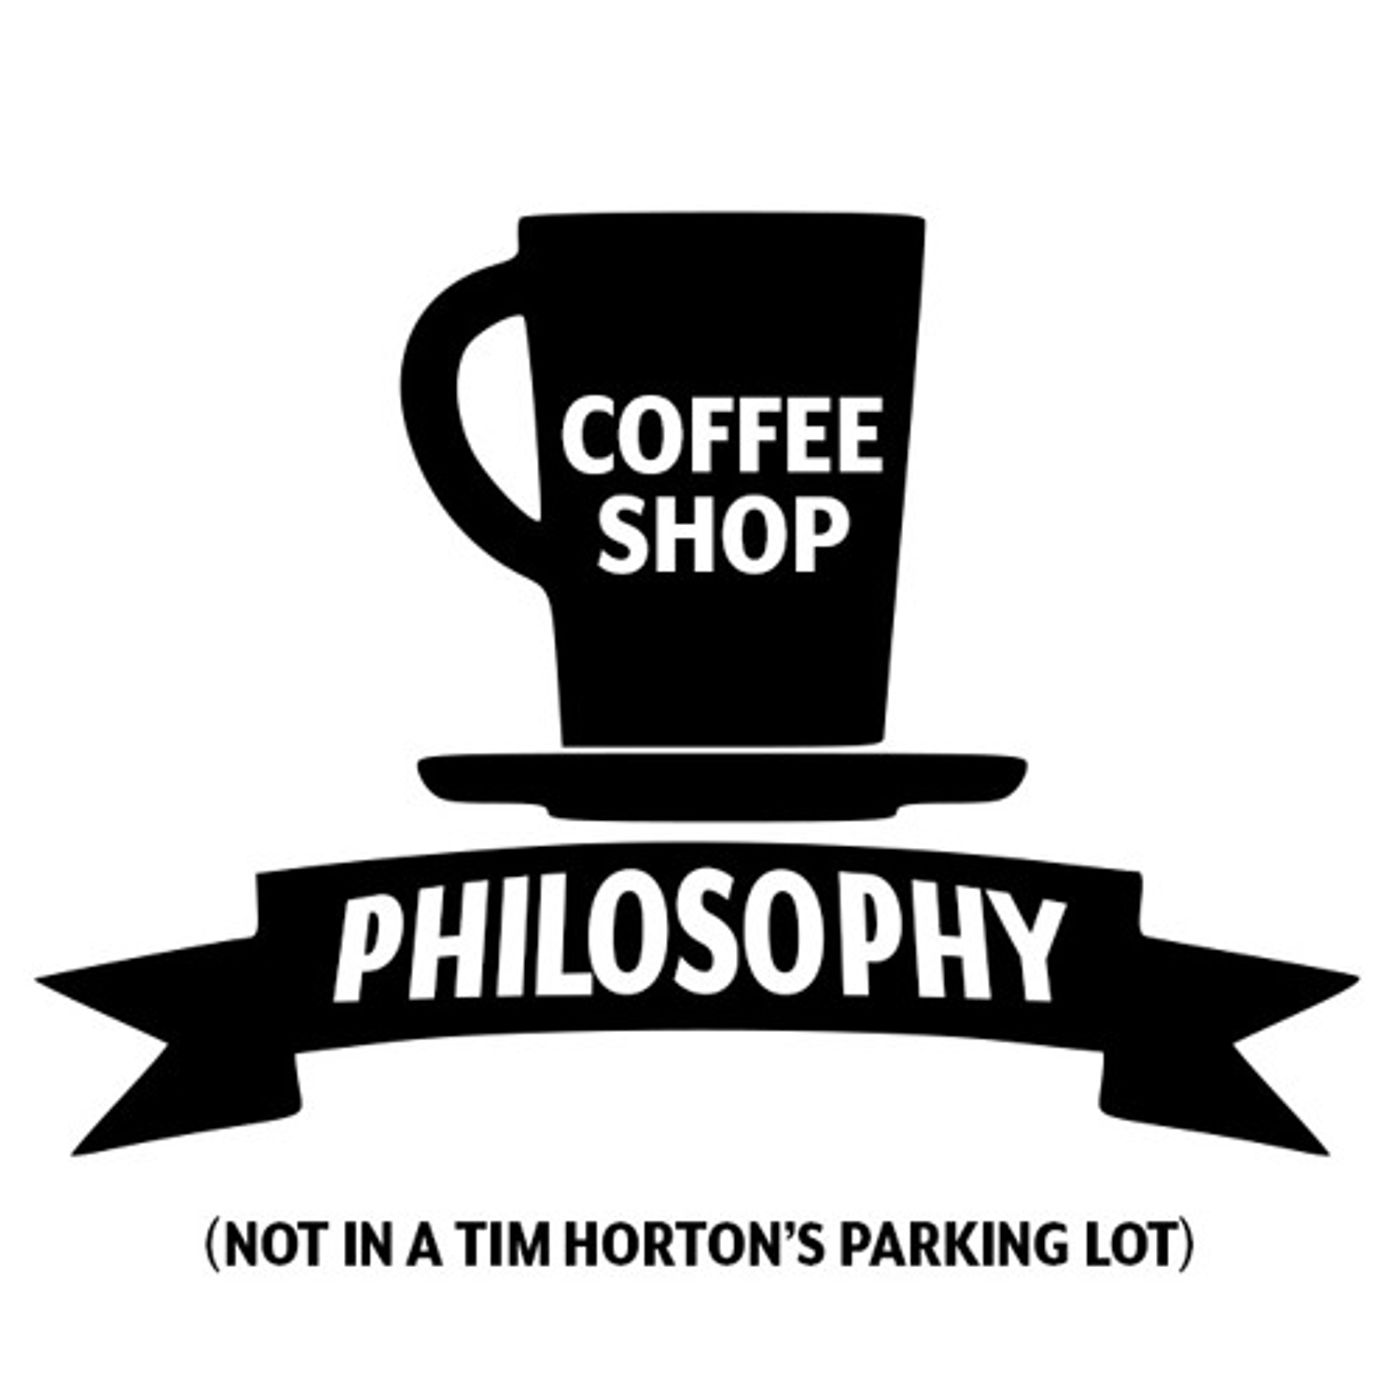 Coffee Shop Philosophy